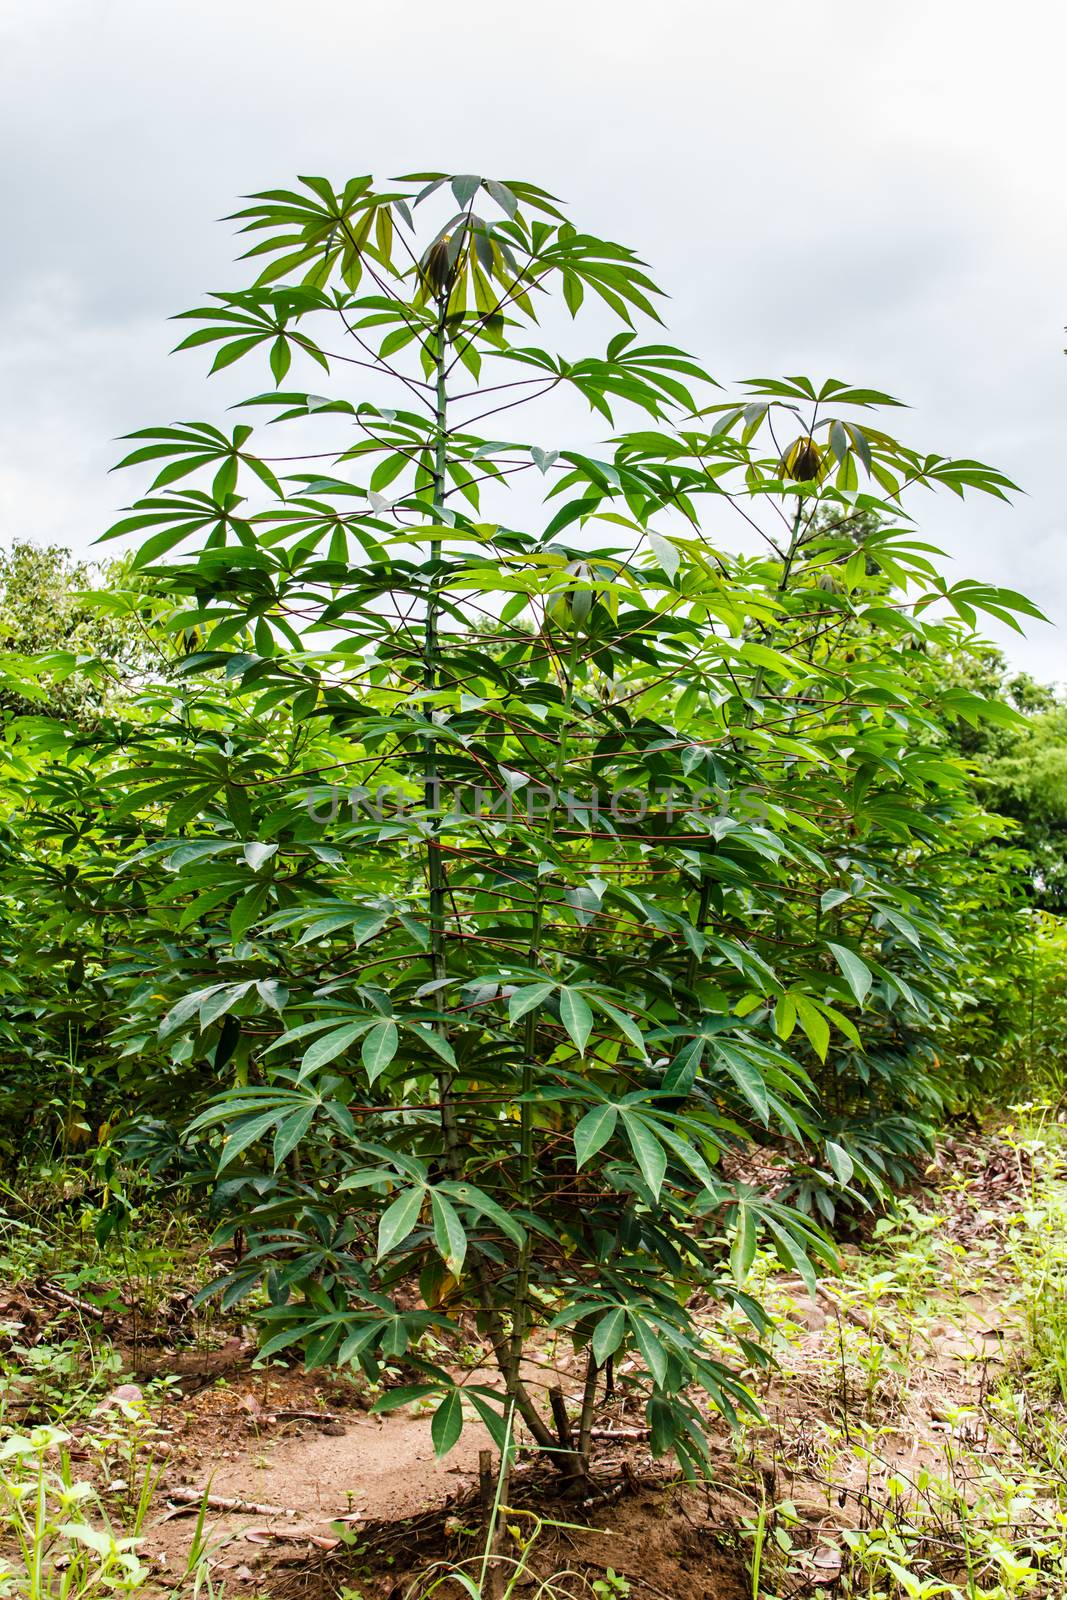 cassava or manioc plant field in Thailand